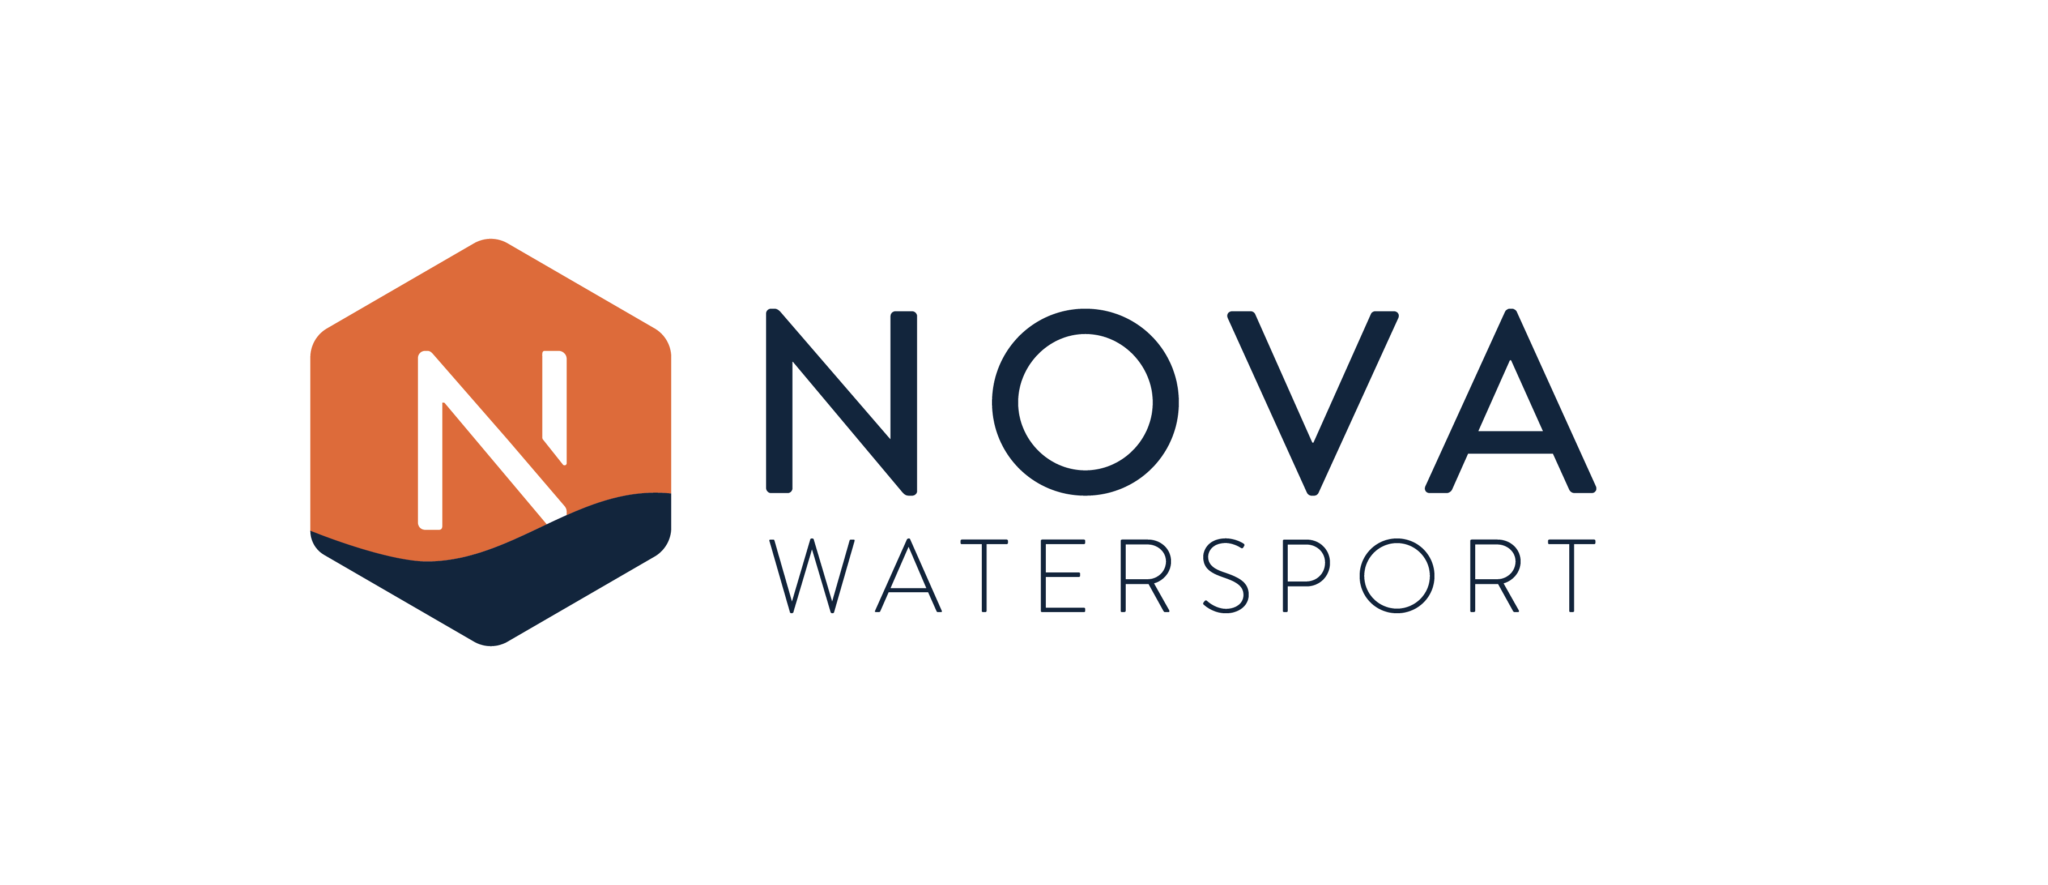 Nova Watersport